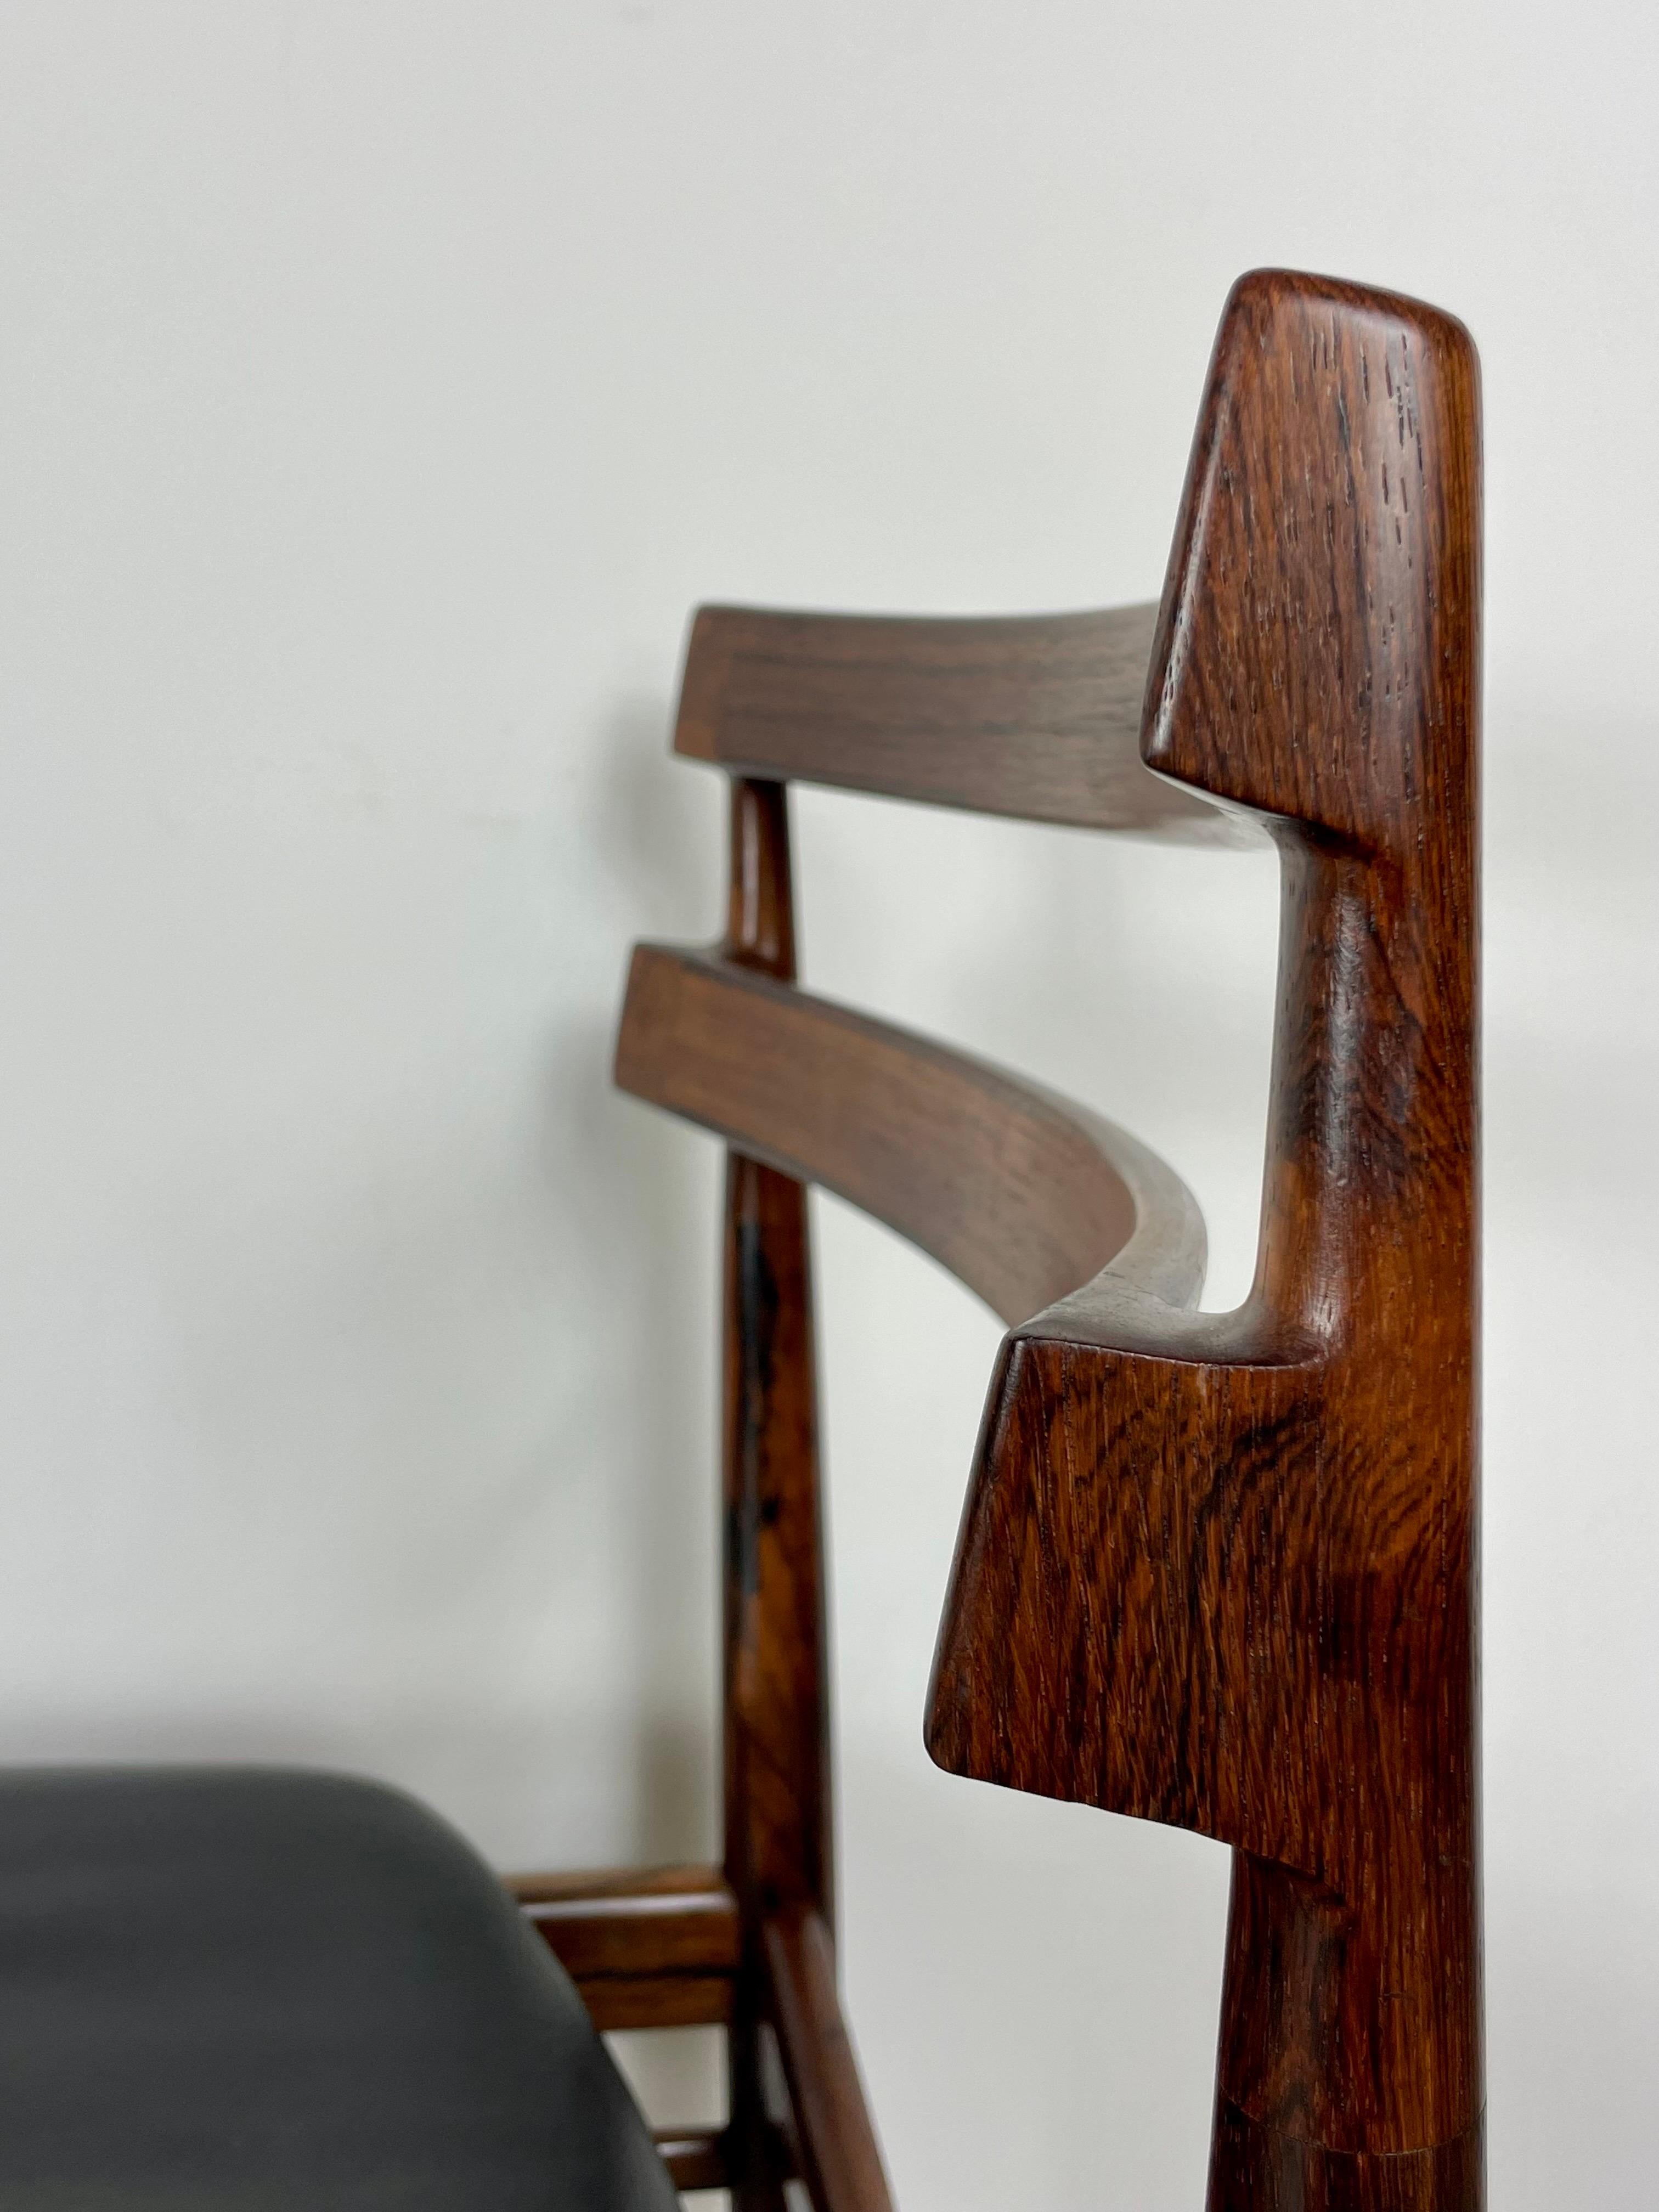 20th Century Palisander Dining Chairs by Henry Rosengren for Brande Møbelfabrik 1950s Denmark For Sale